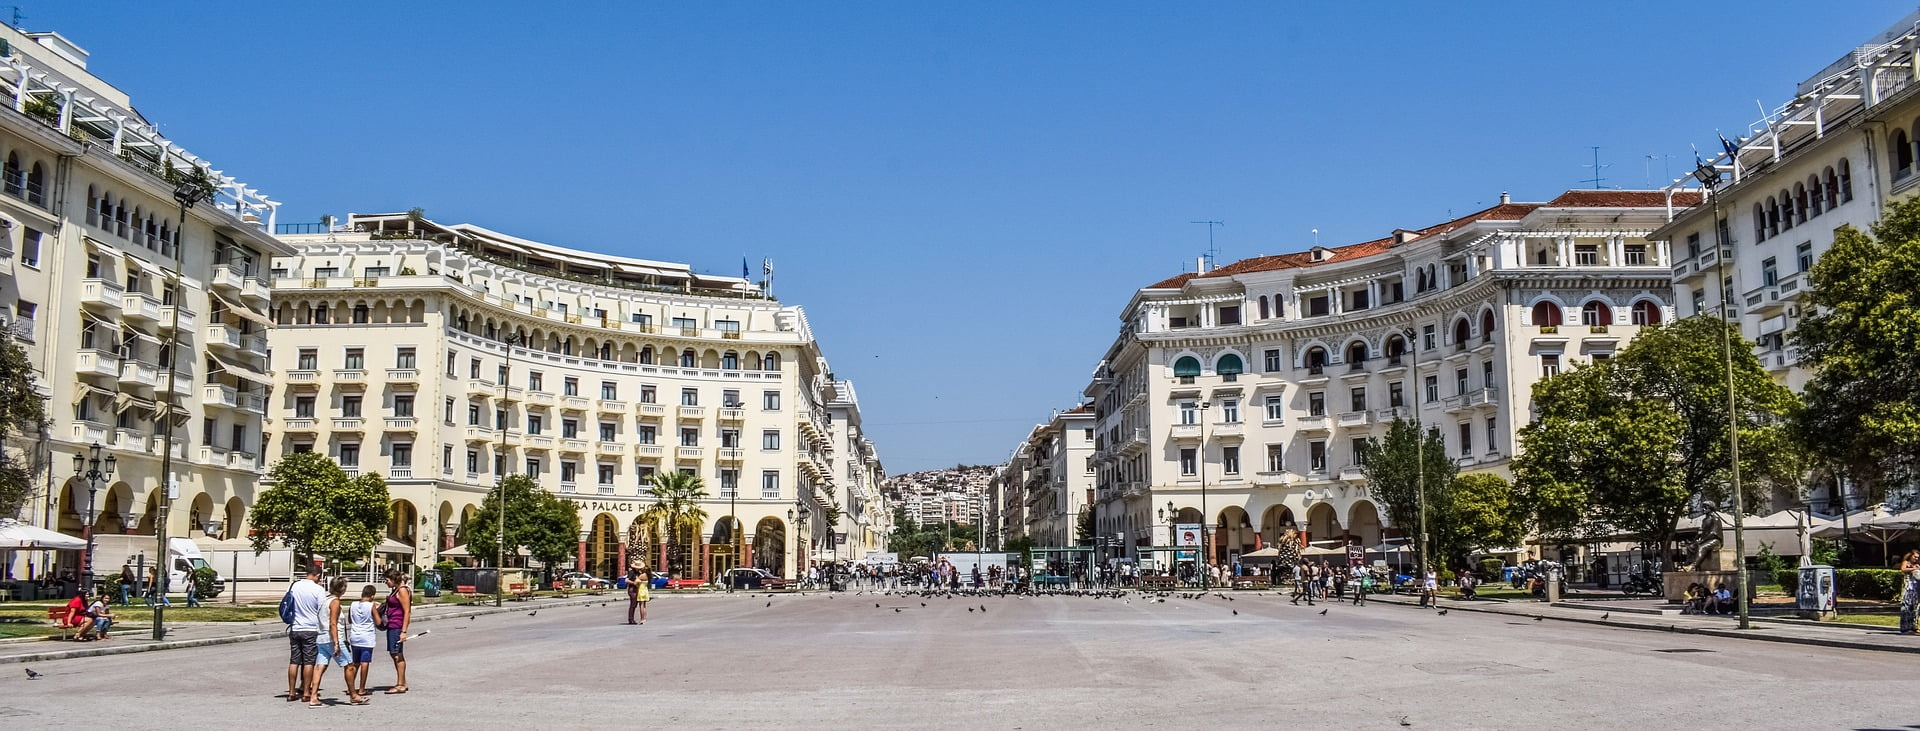 thessaloniki main square - feature image